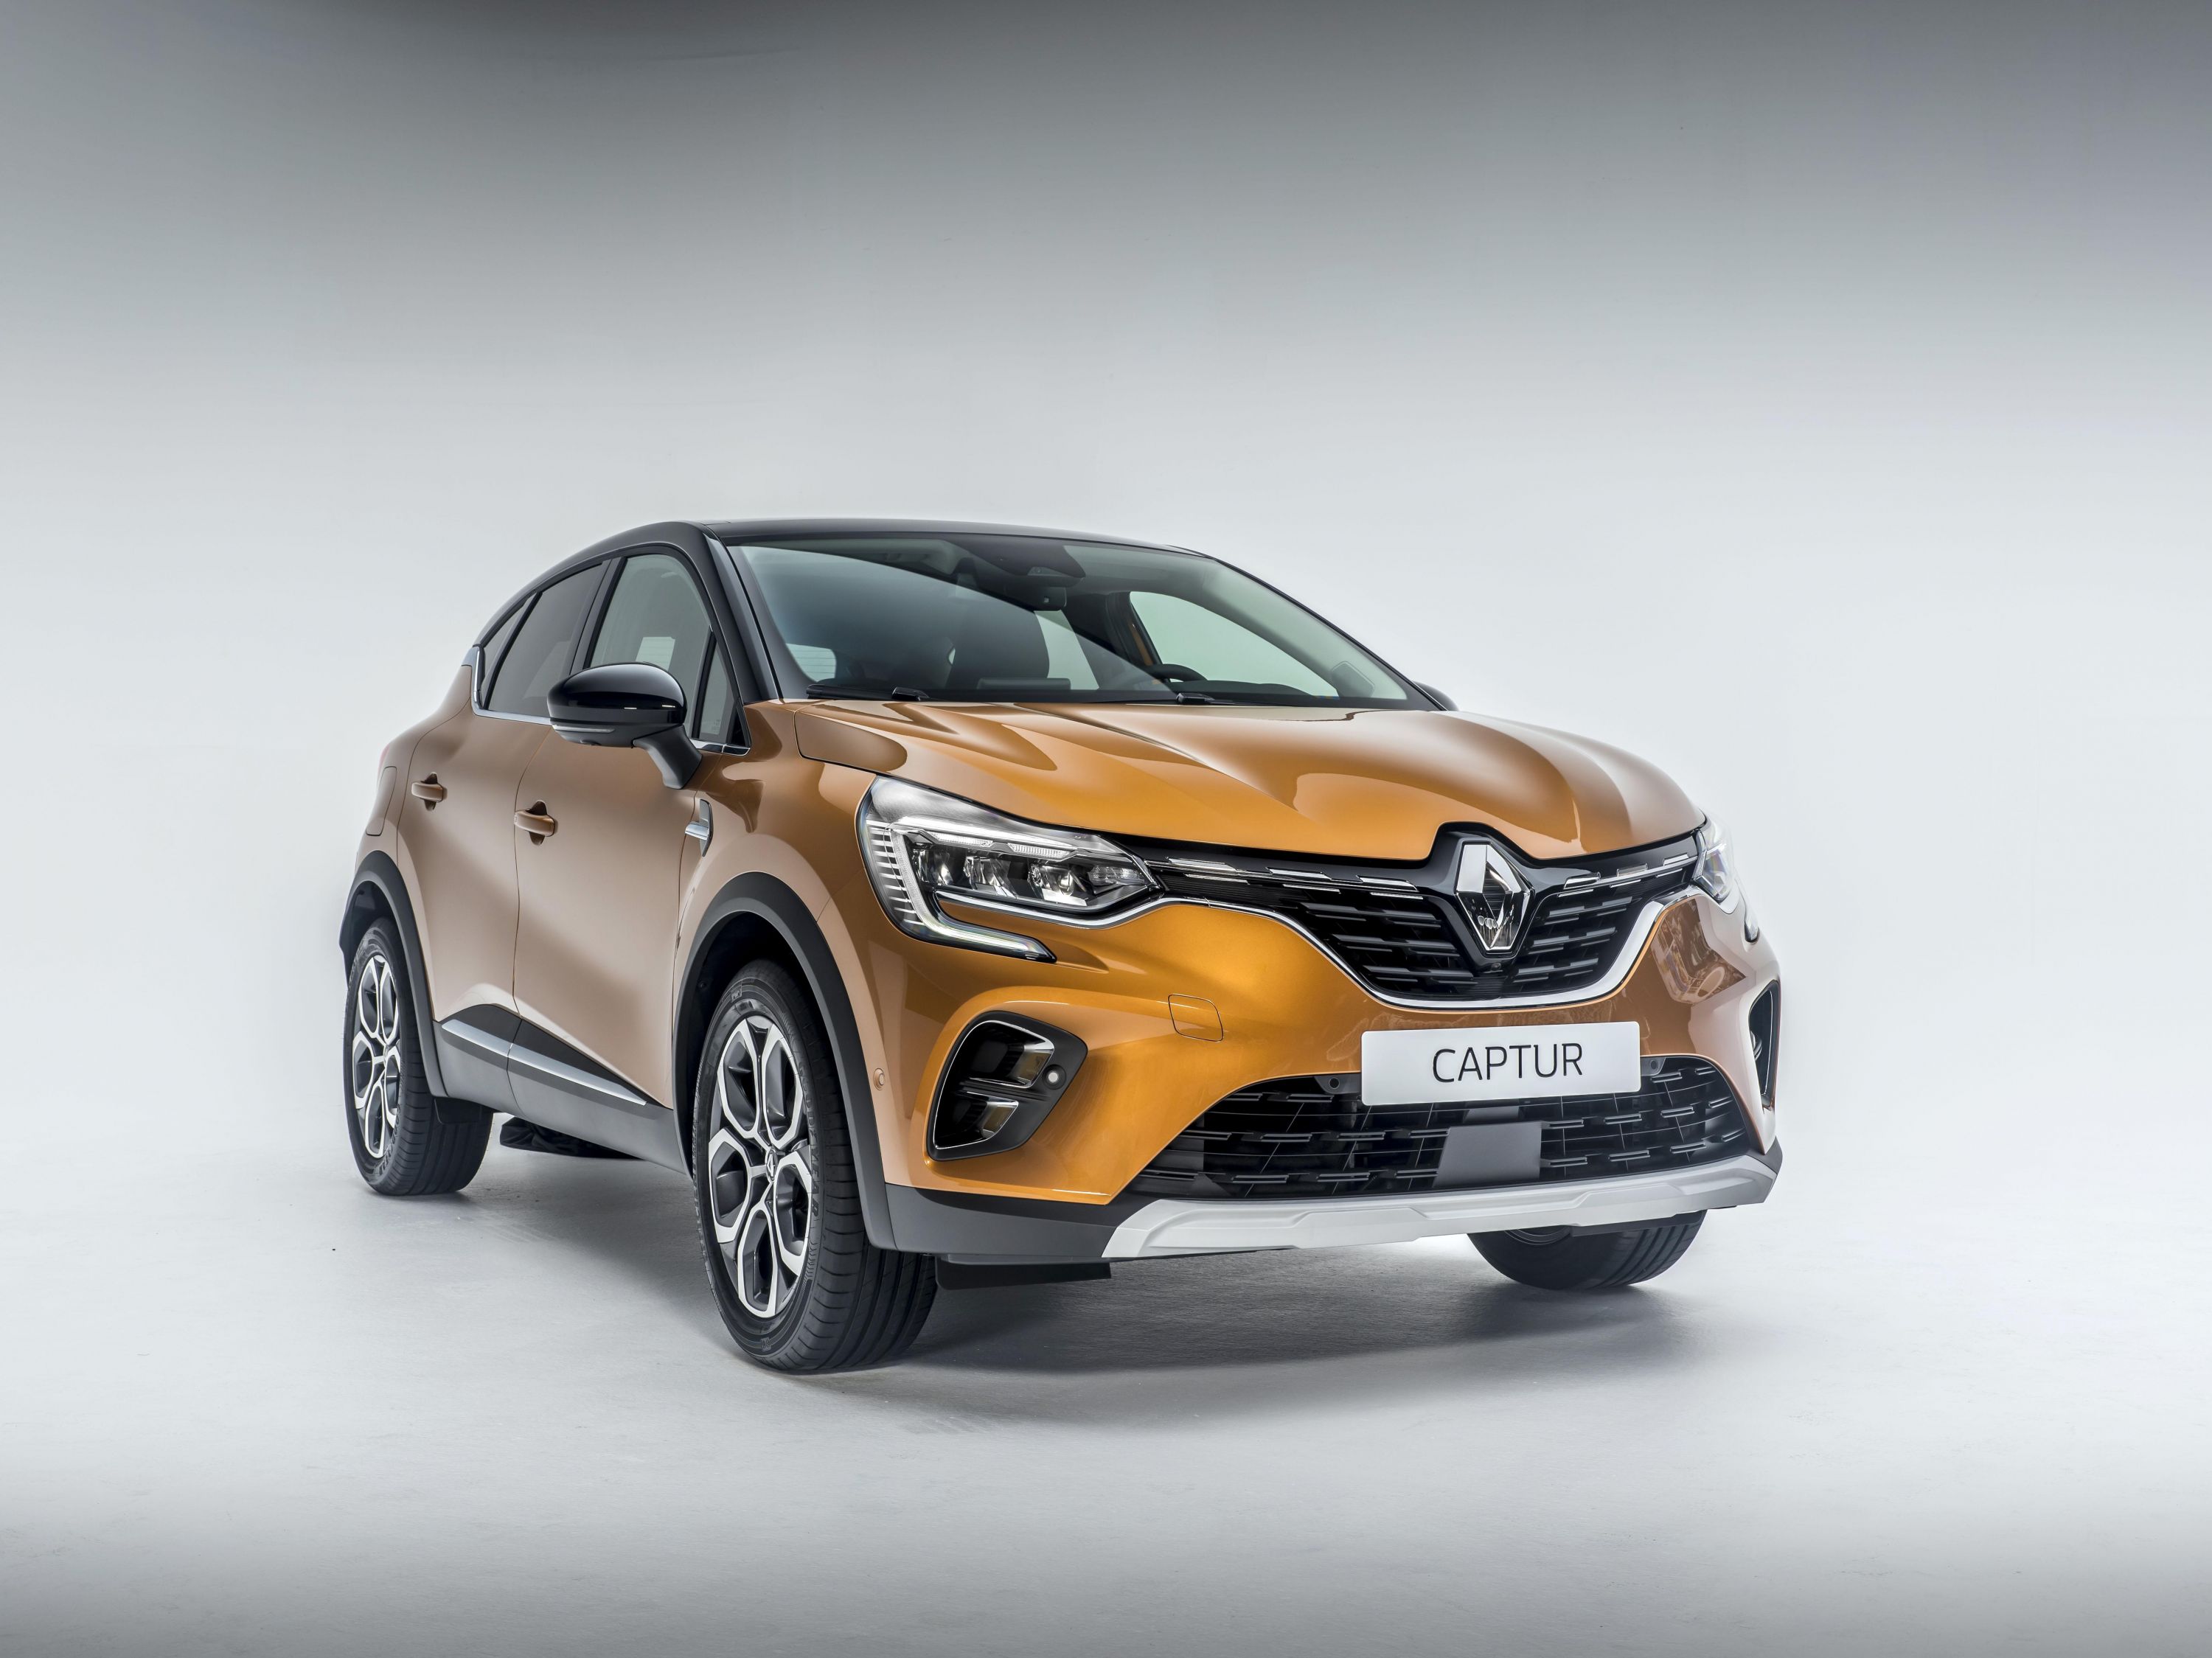 2021 Renault Captur price and specs - Drive